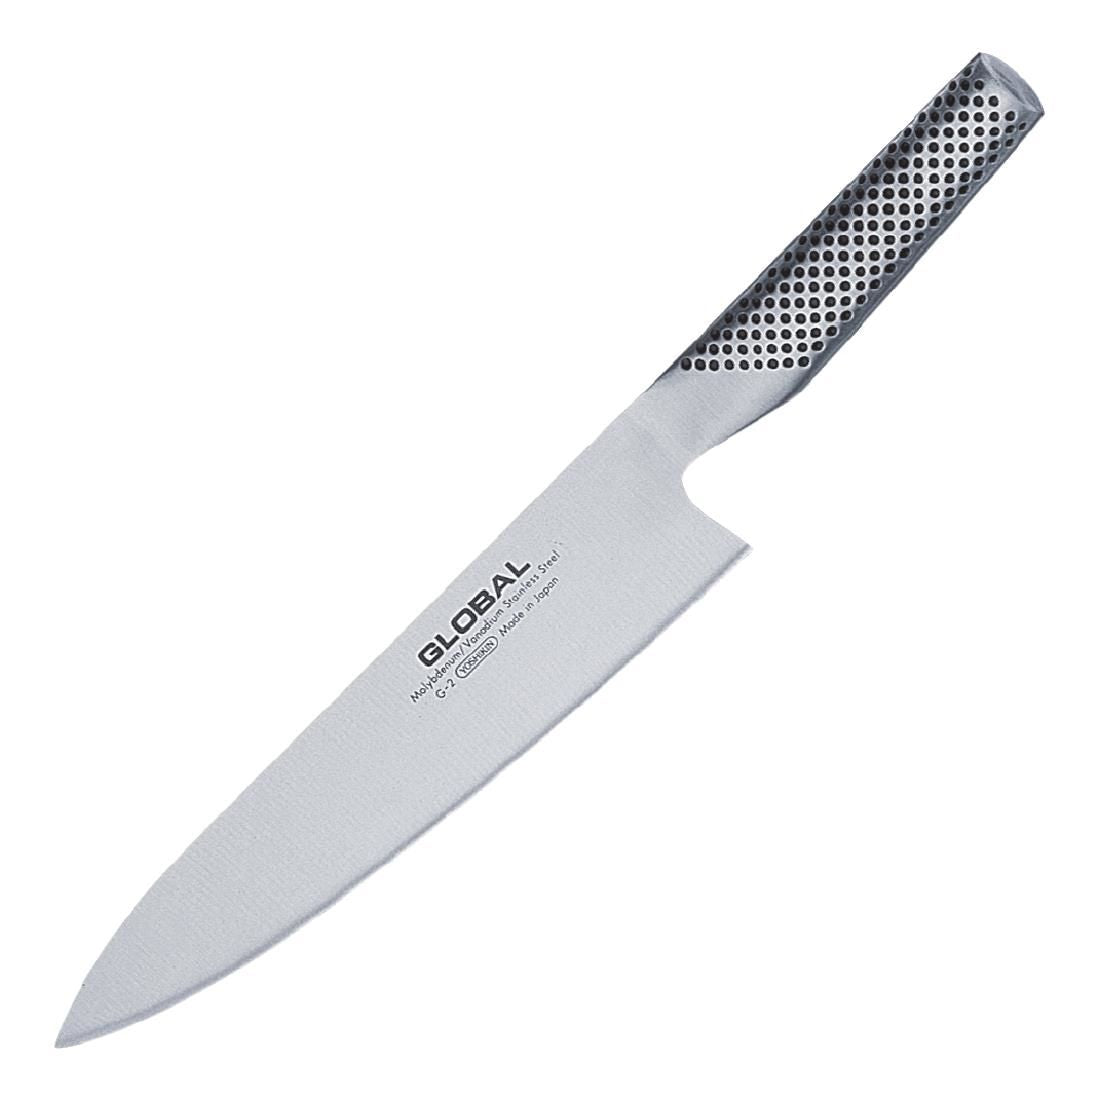 Global G 2 Chef Knife 20.5cm JD Catering Equipment Solutions Ltd